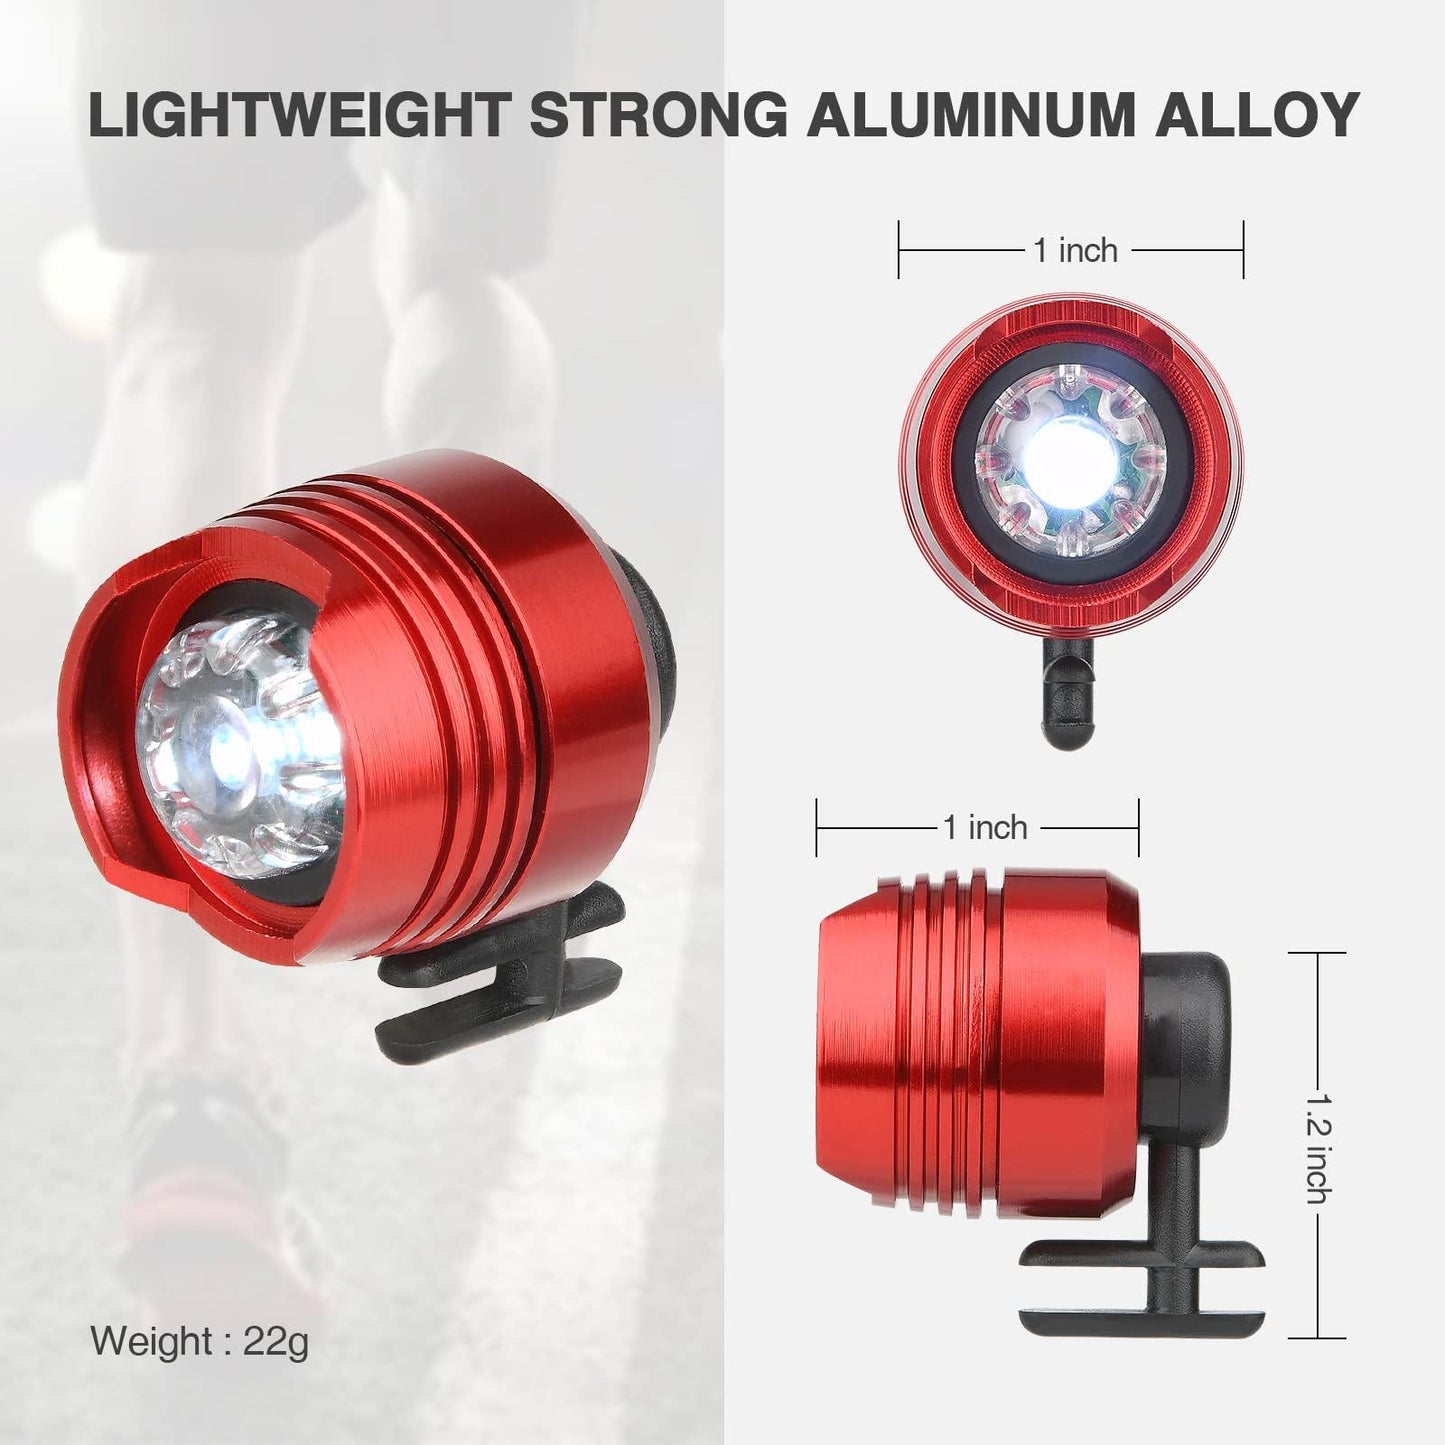 Lightweight LED Headlights: Strong Aluminum Alloy Build